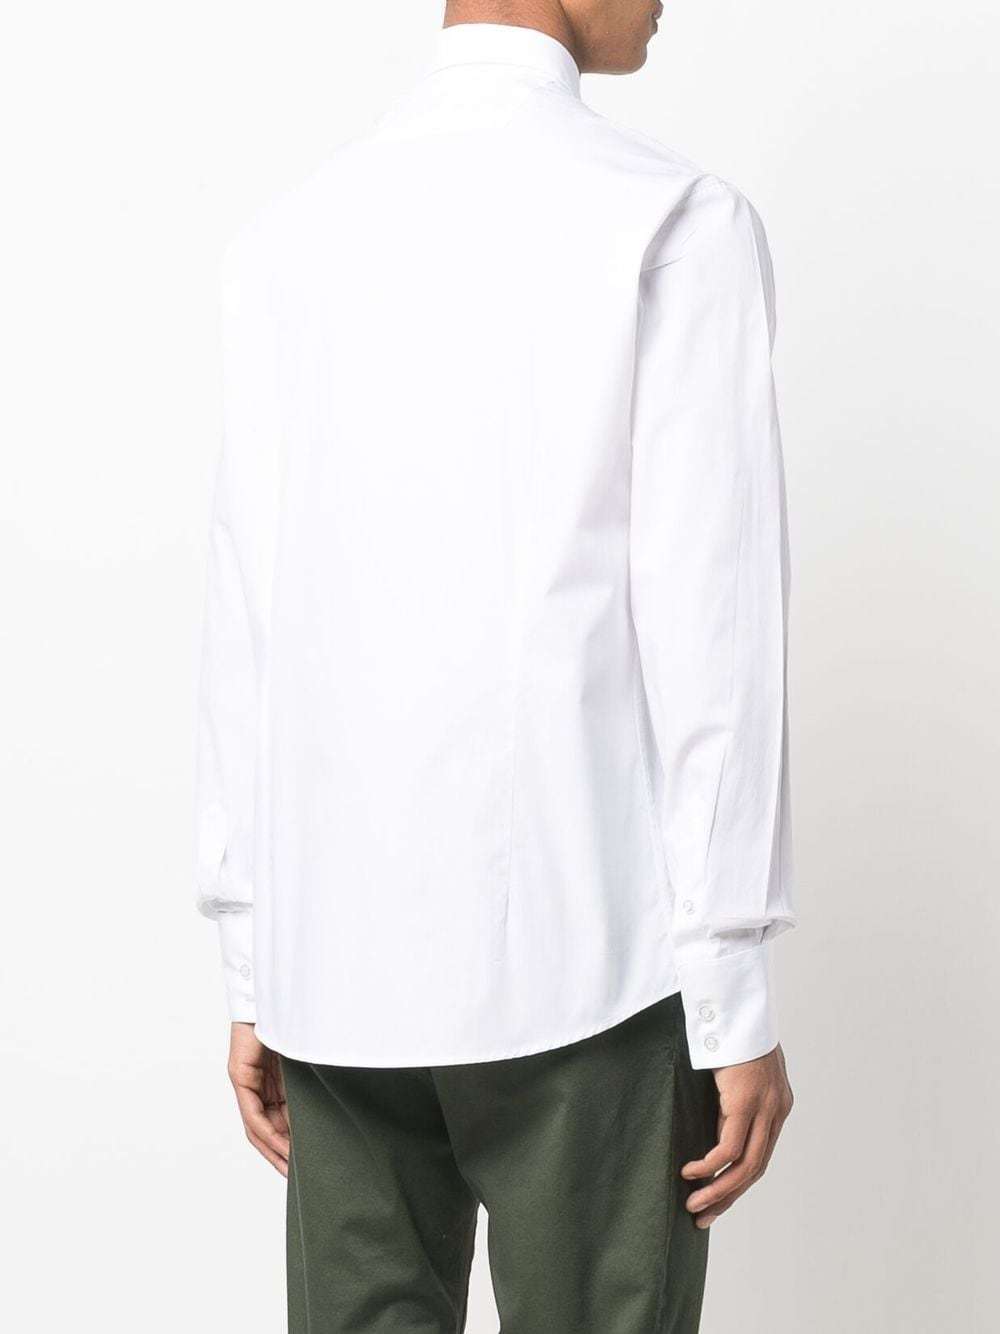 Philipp Plein Hexagon Embroidery Dress Shirt, $410 | farfetch.com ...